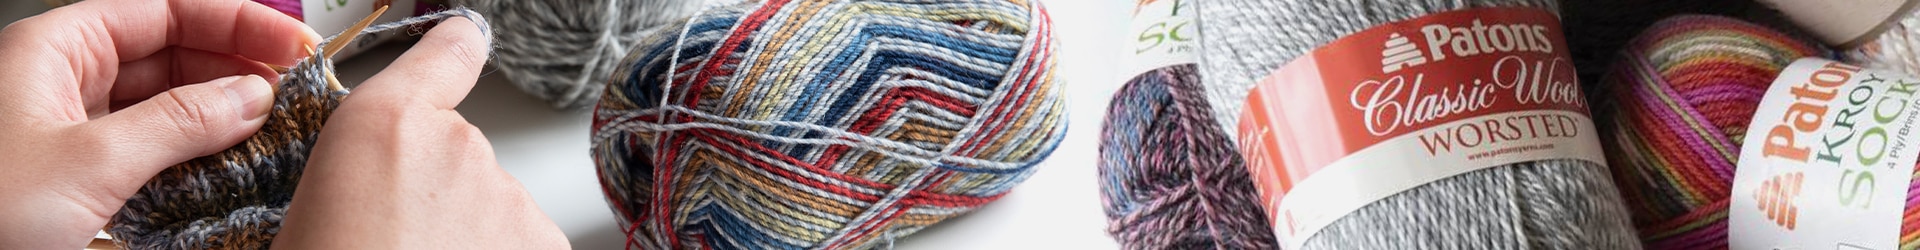 Patons Yarn image